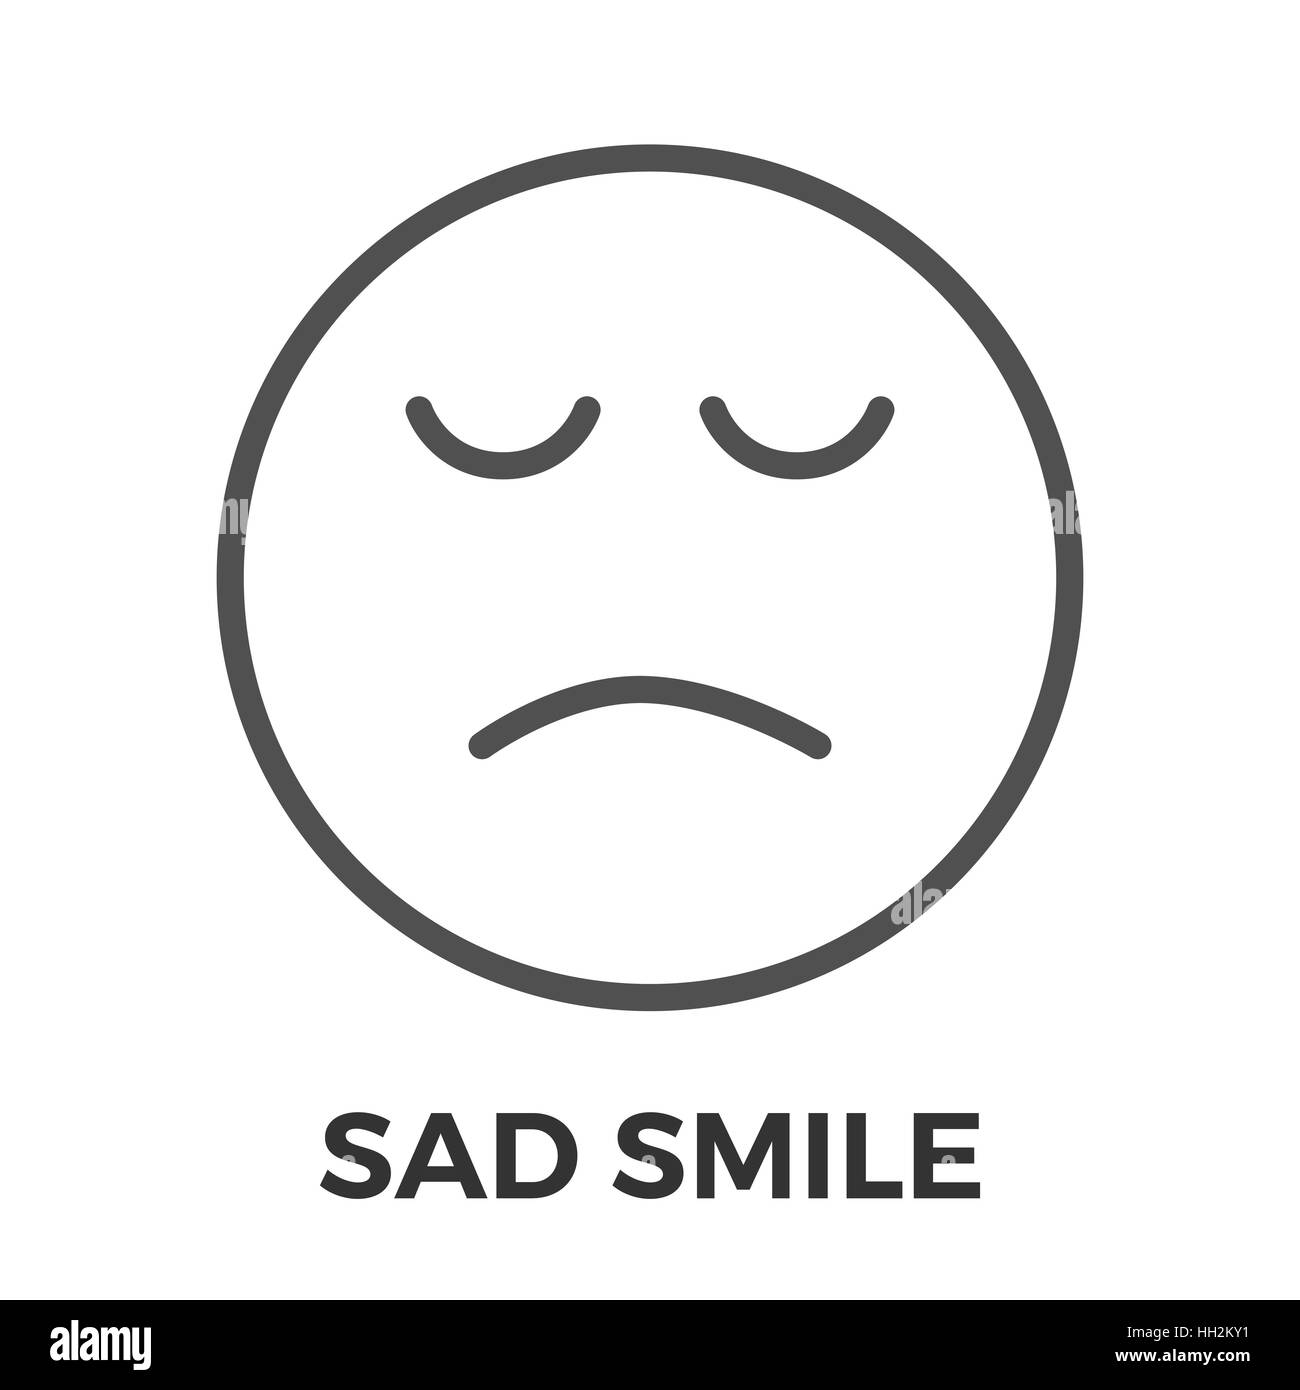 Sad smile Black and White Stock Photos & Images - Alamy